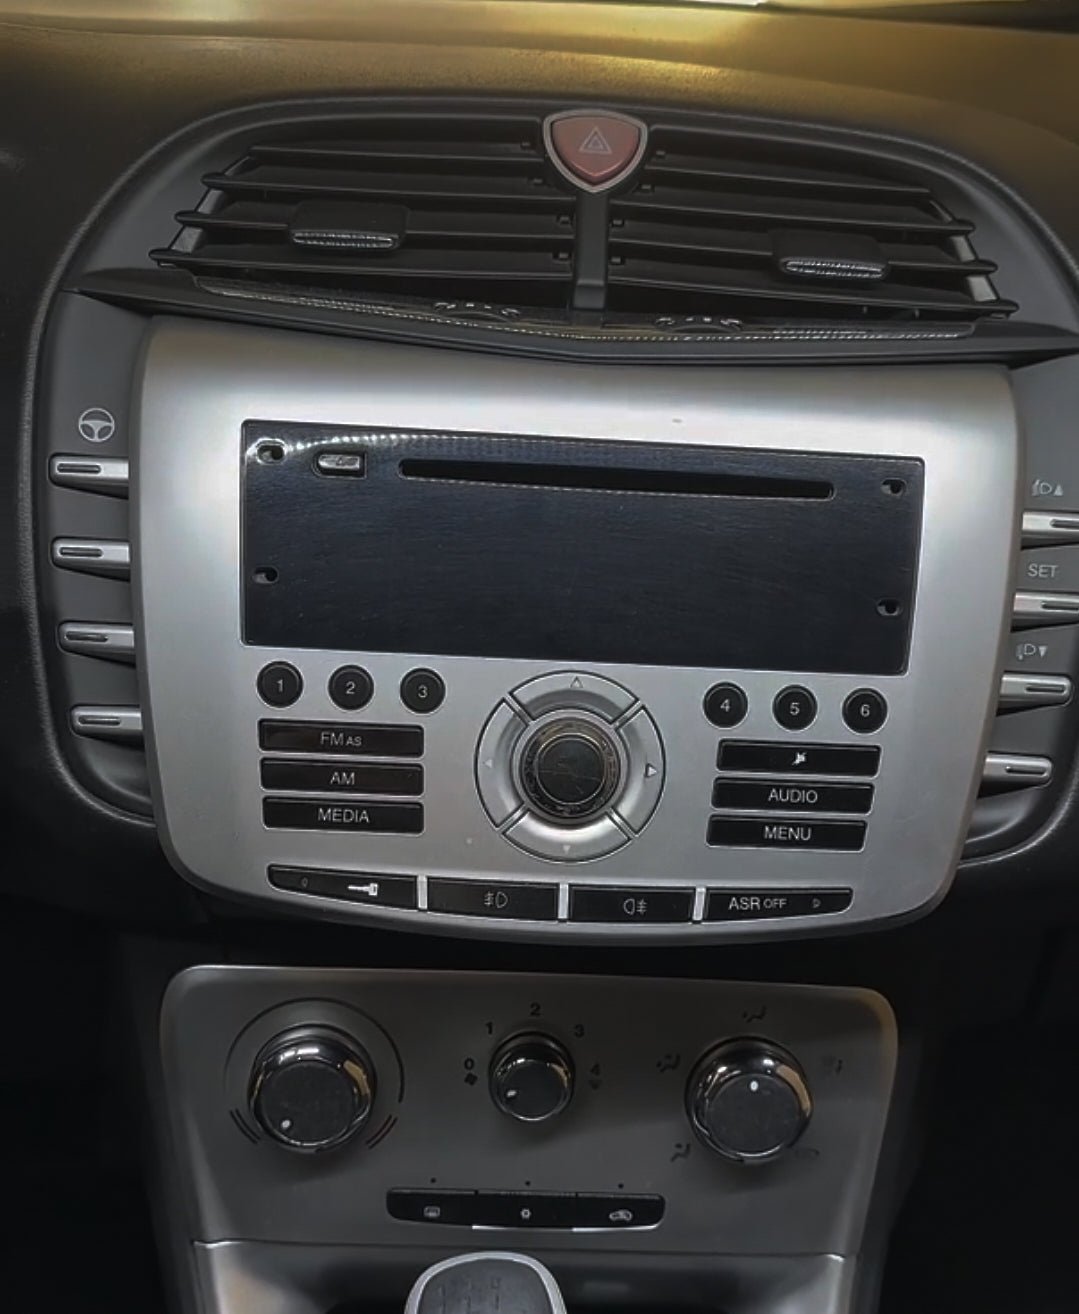 Autoradio per Lancia Delta [2009-2014] - 1Din 10"Pollici Android, GPS, Bluetooth, Radio, Navigatore, Wifi, PlayStore